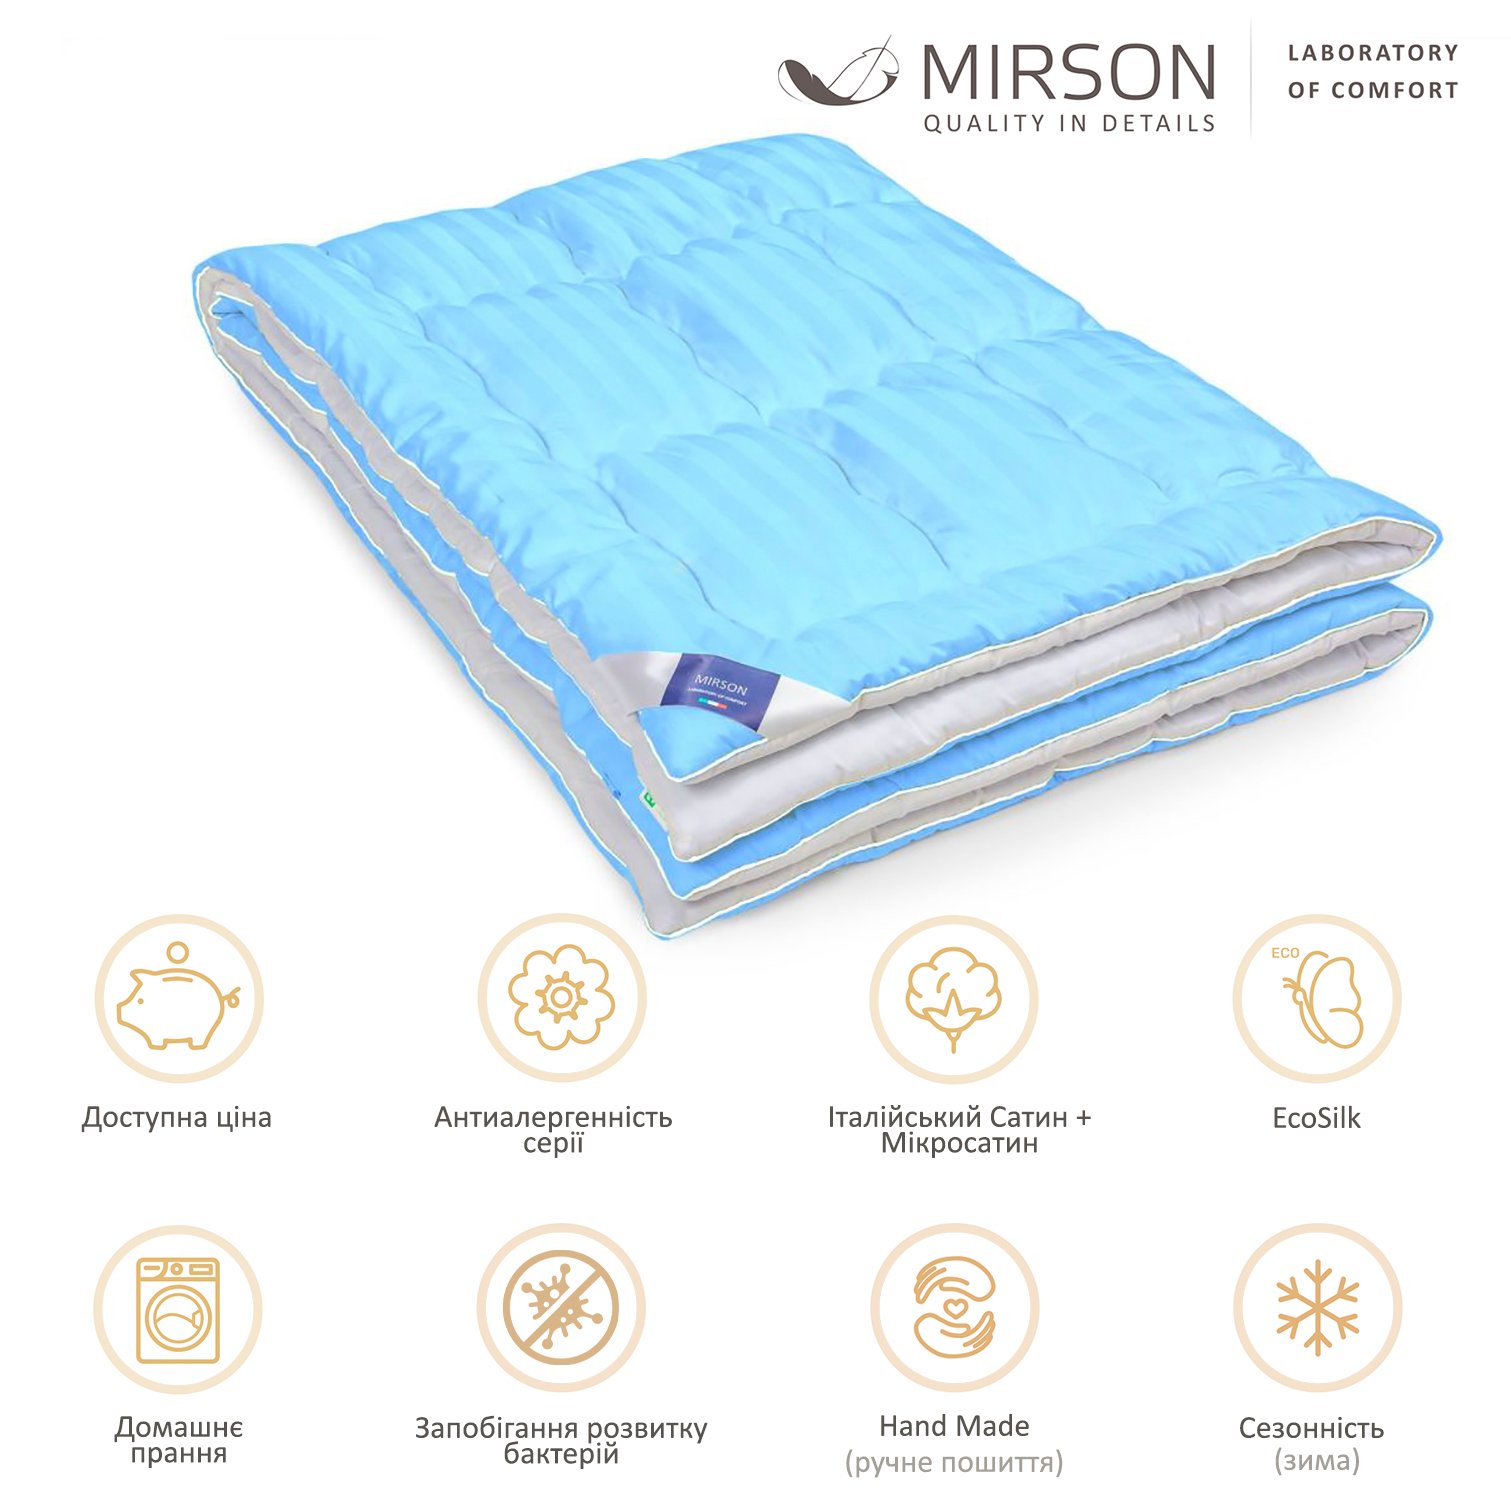 Одеяло антиаллергенное MirSon Valentino Hand Made EcoSilk №0554, зимнее, 155x215 см, бело-голубое (14212322) - фото 5